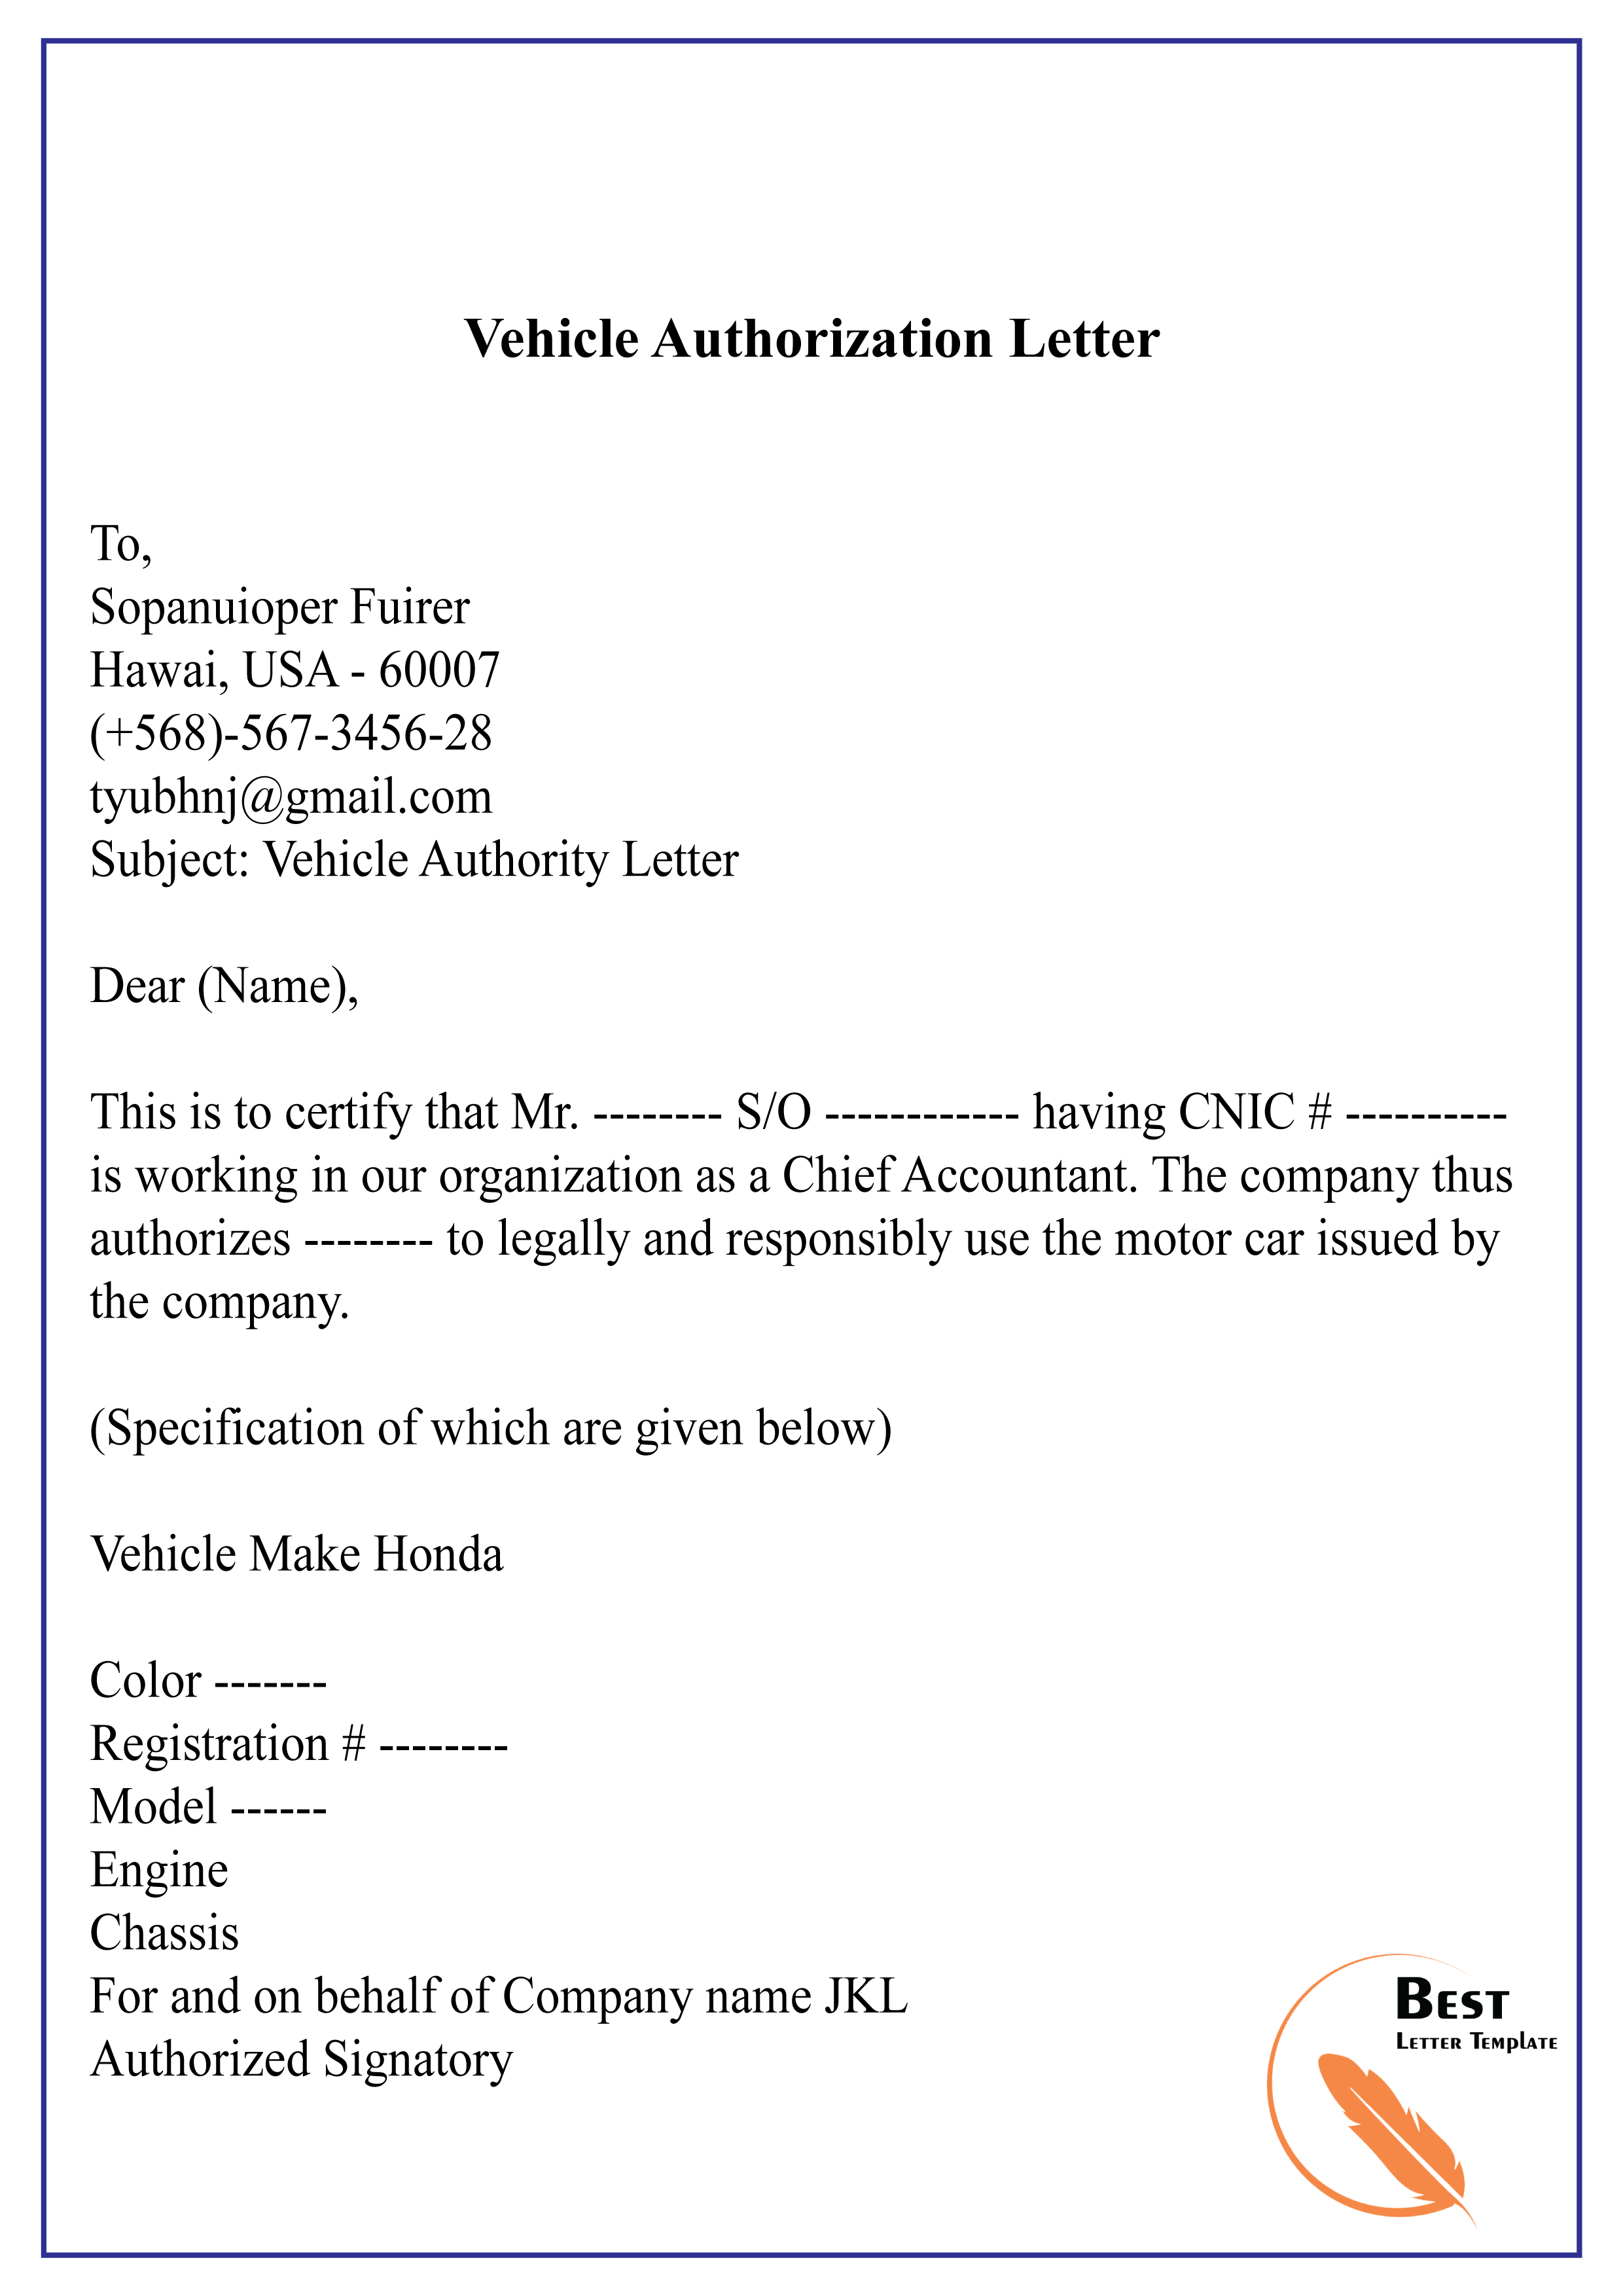 Vehicle Authorization Letter 01 